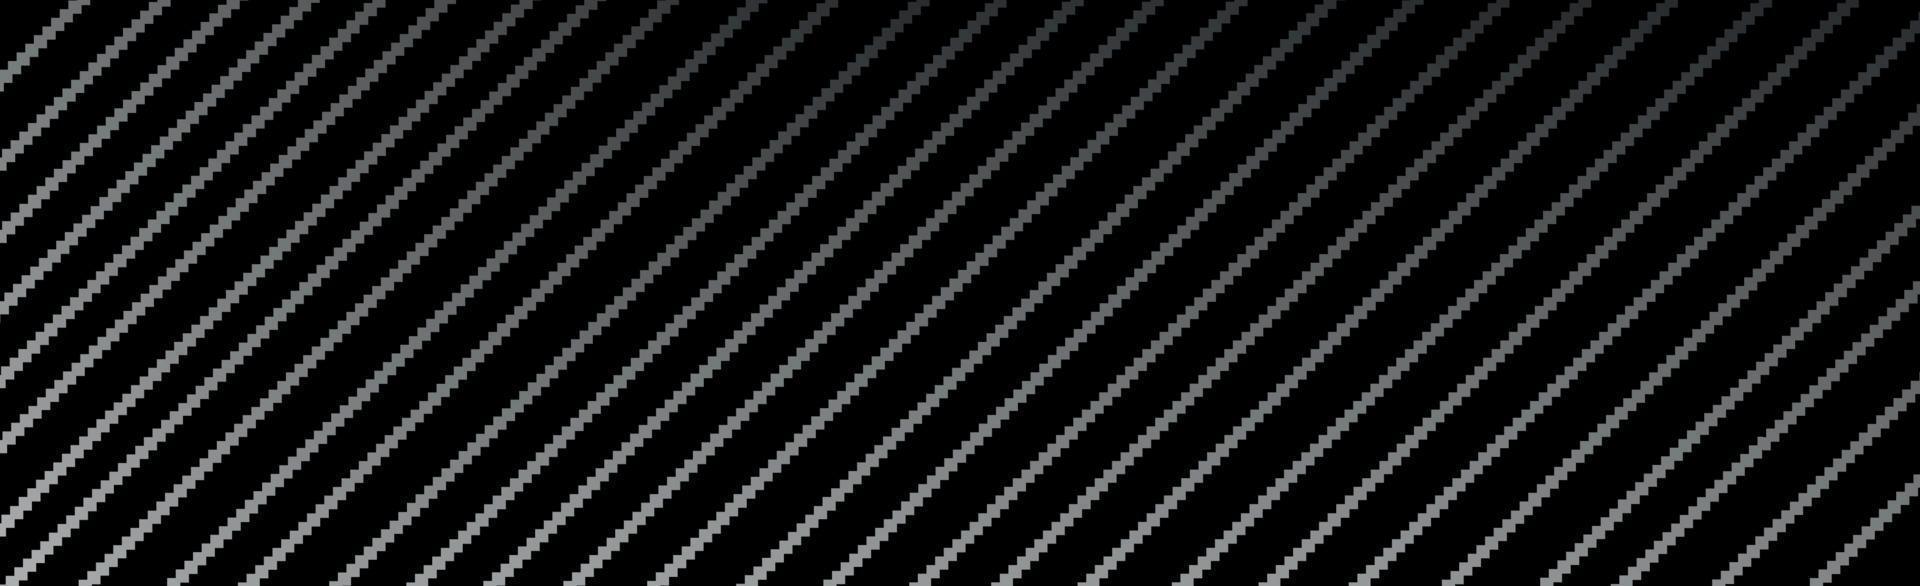 Panoramic texture of black and gray carbon fiber 3607470 Vector Art at ...